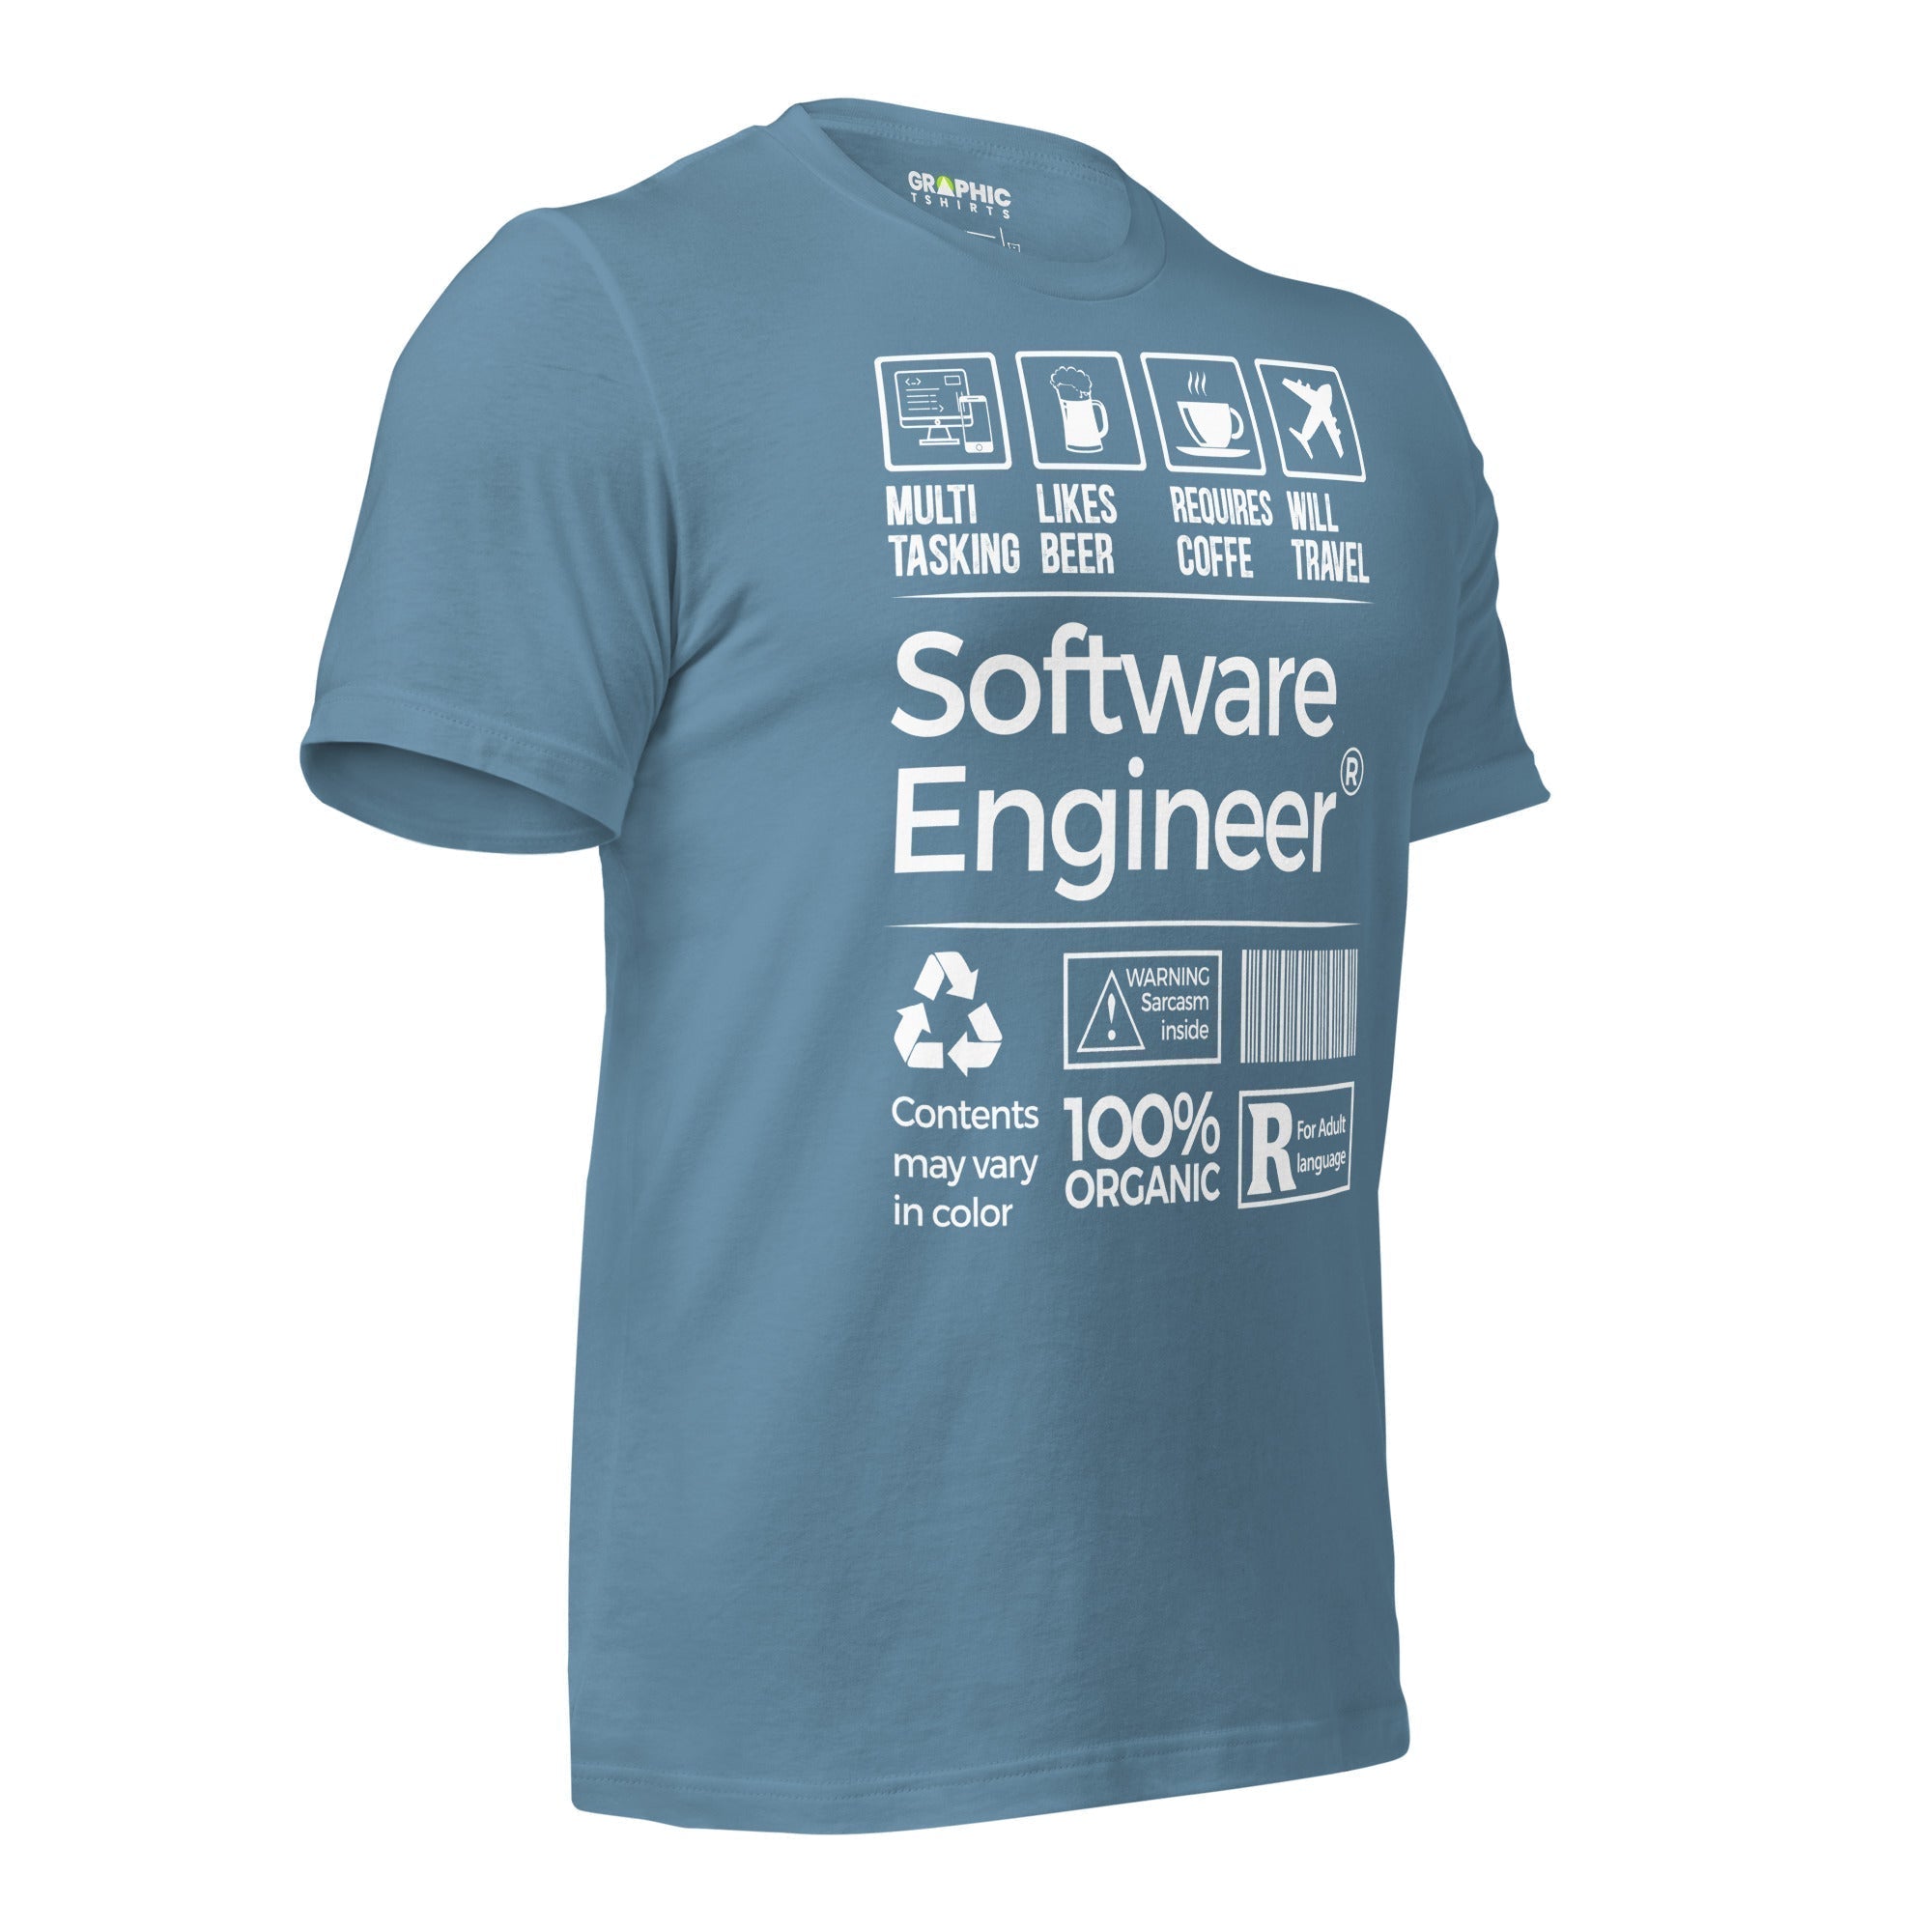 Unisex Staple T-Shirt - Software Engineer - GRAPHIC T-SHIRTS